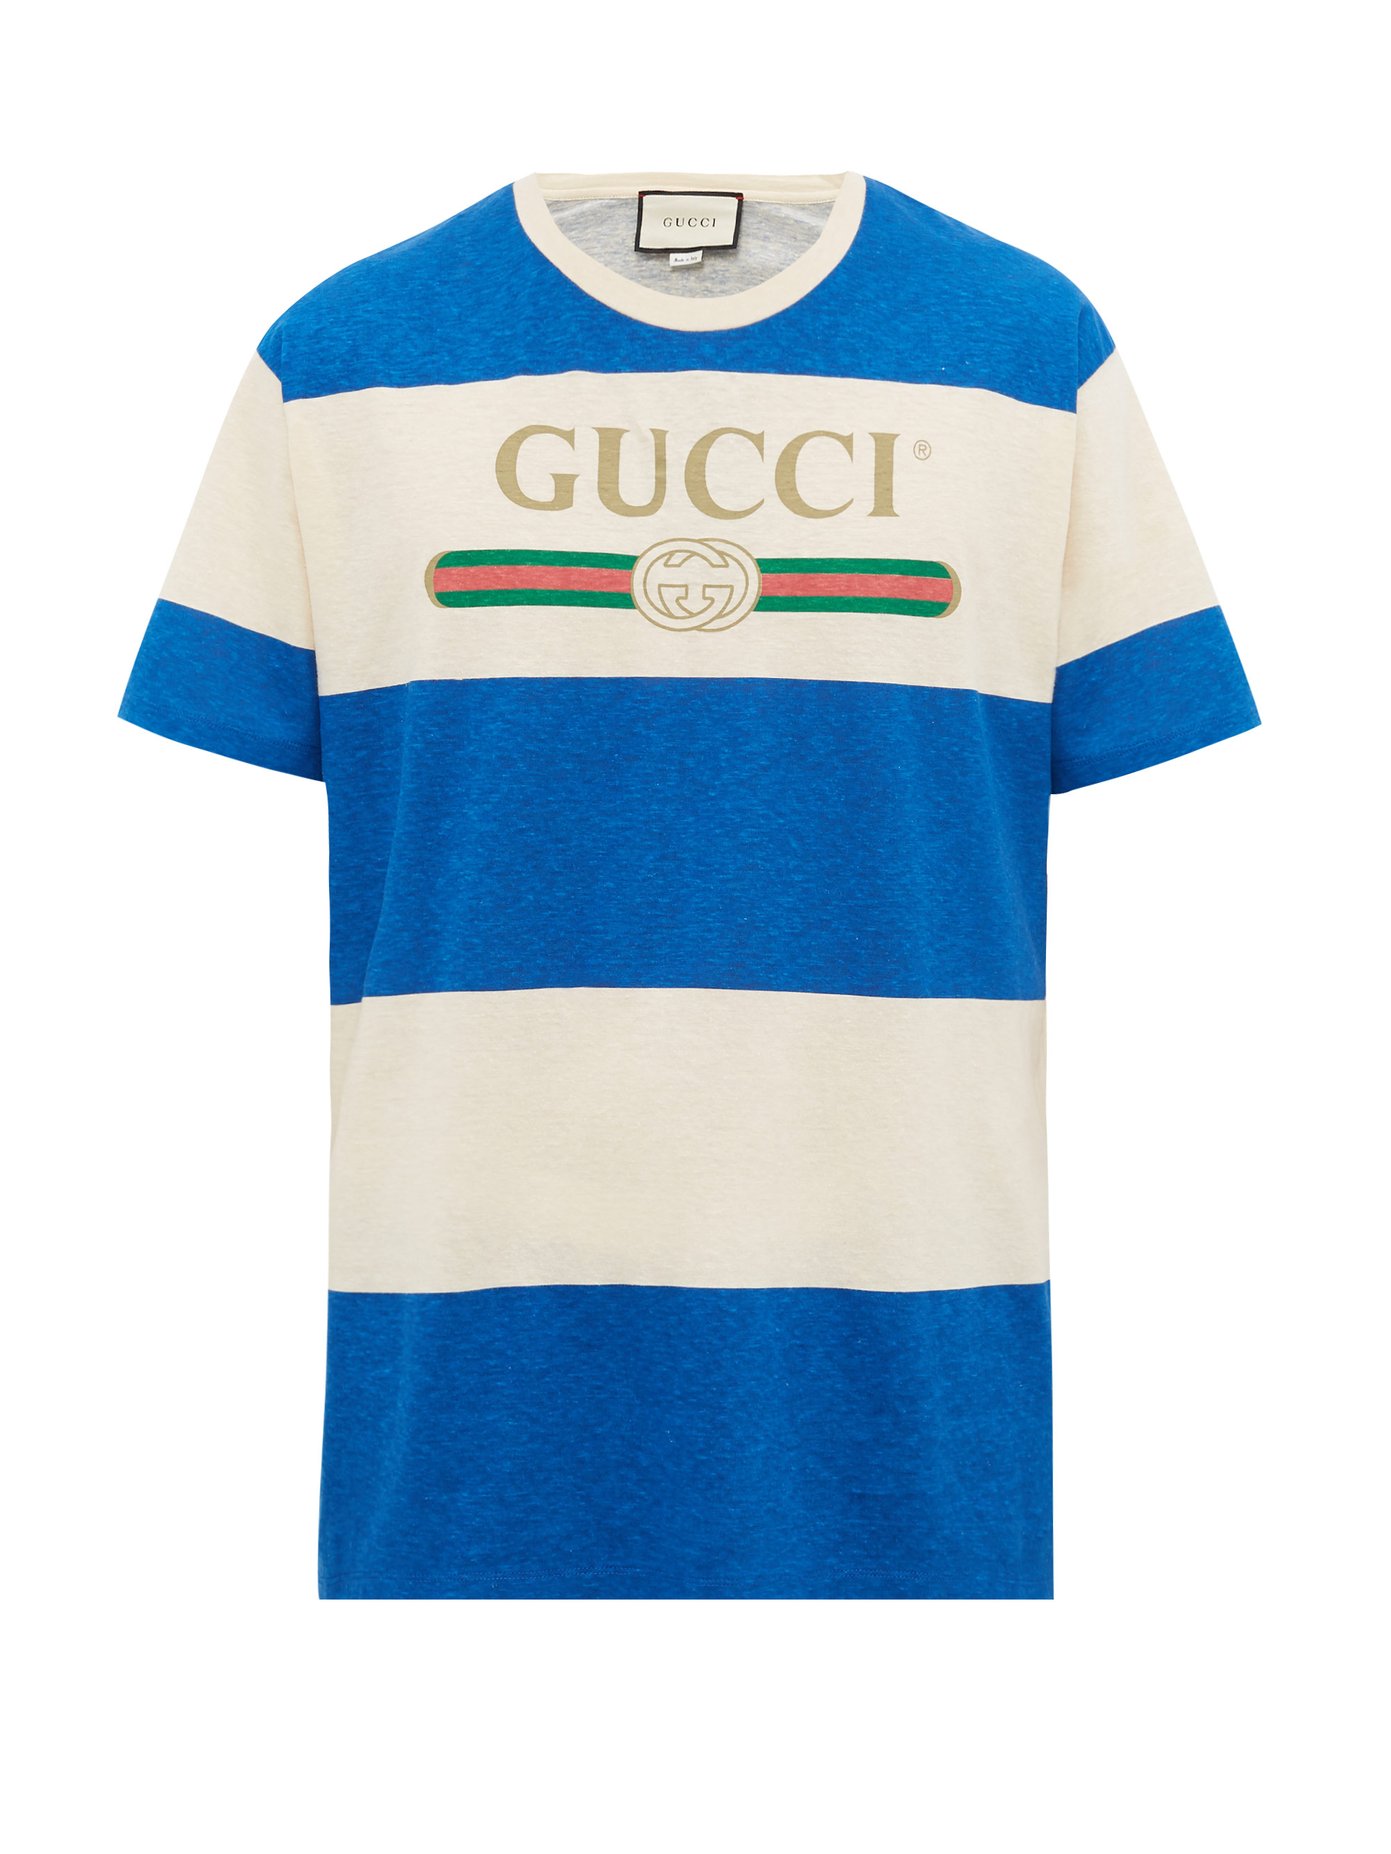 Gucci Blue Shirt Hotsell, 60% OFF | www.hcb.cat